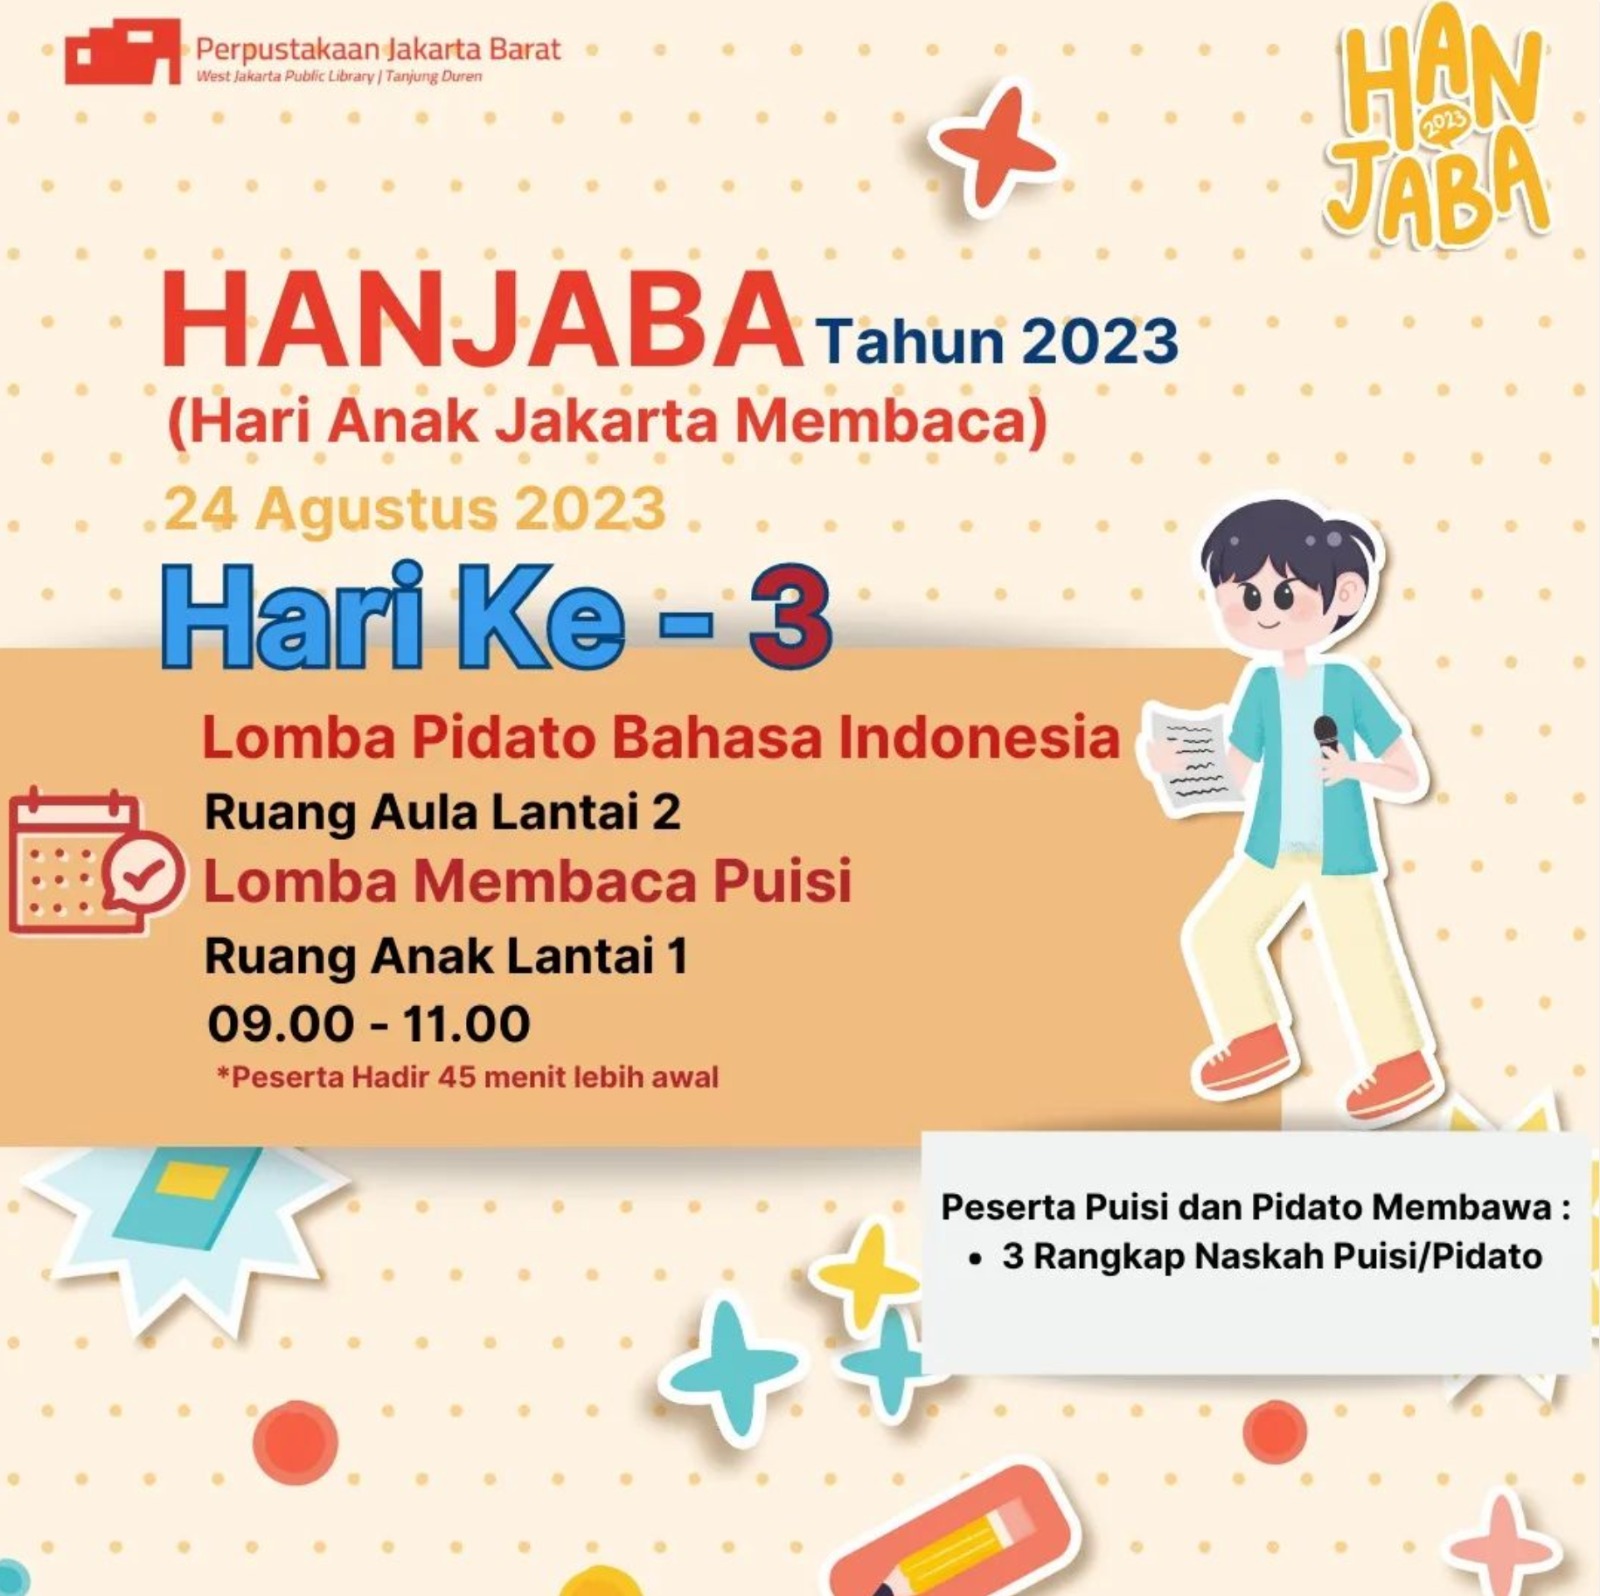 Lomba Membaca Puisi & Lomba Pidato Bahasa Indonesia Hari Anak Jakarta Membaca (HANJABA) Jakarta Barat